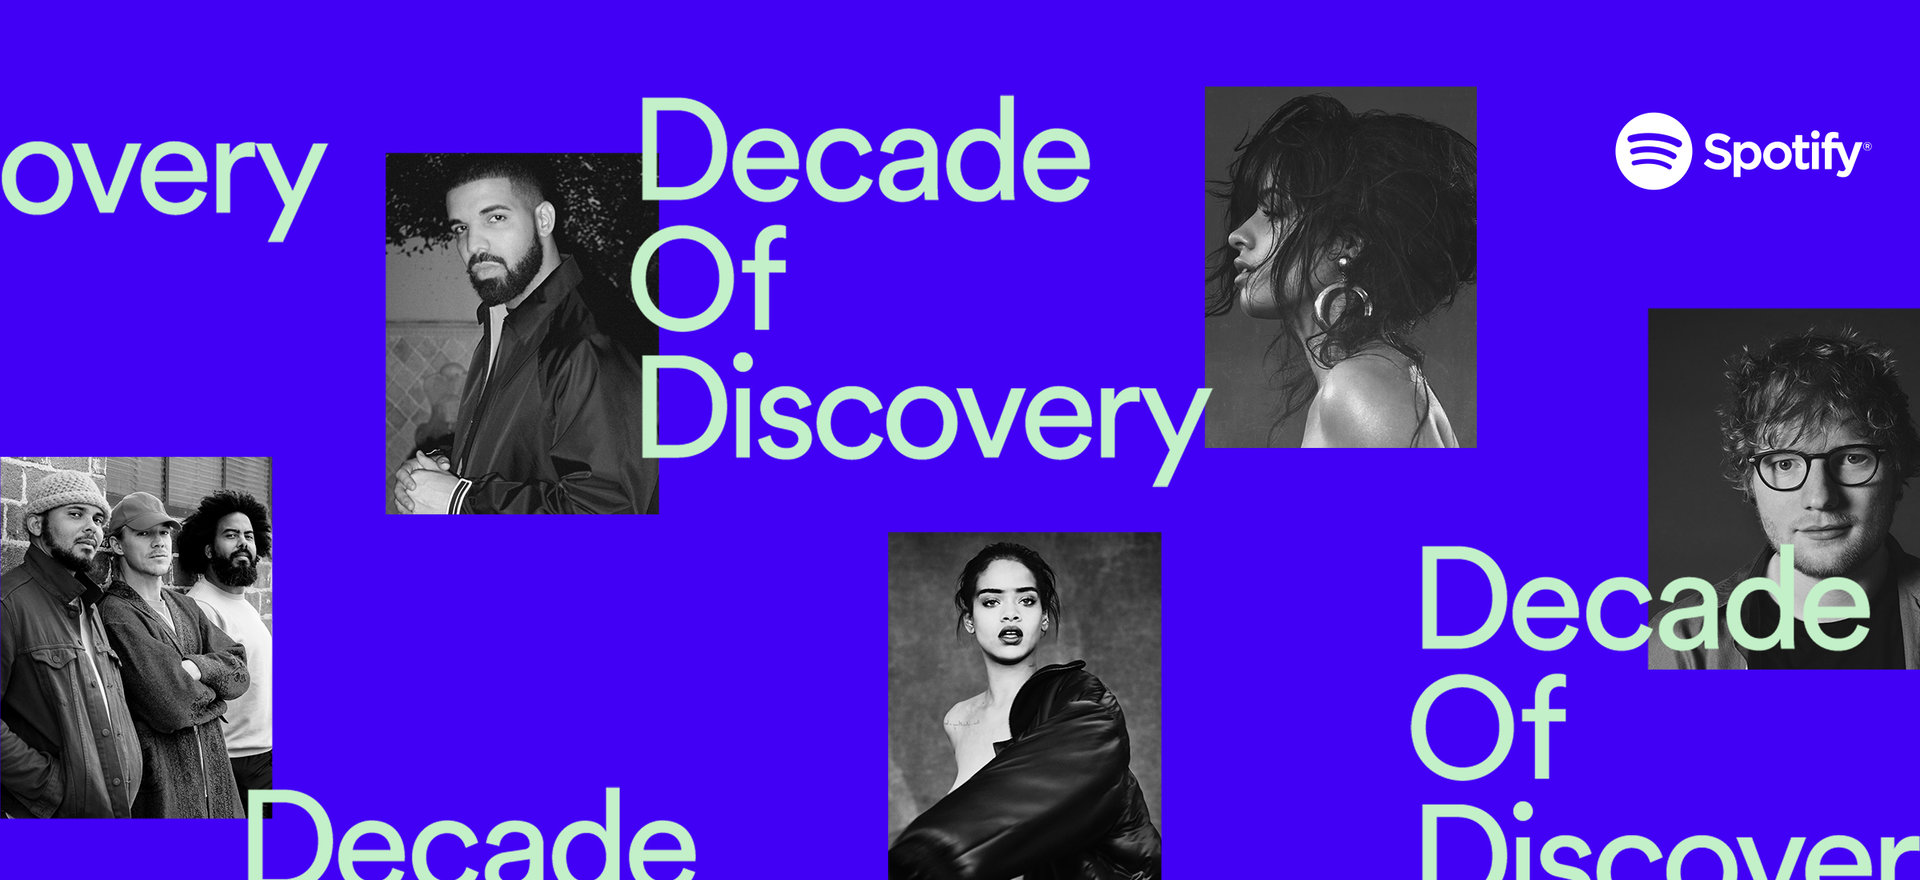 Decade of Discovery: i brani più ascoltati in dieci anni di Spotify thumbnail